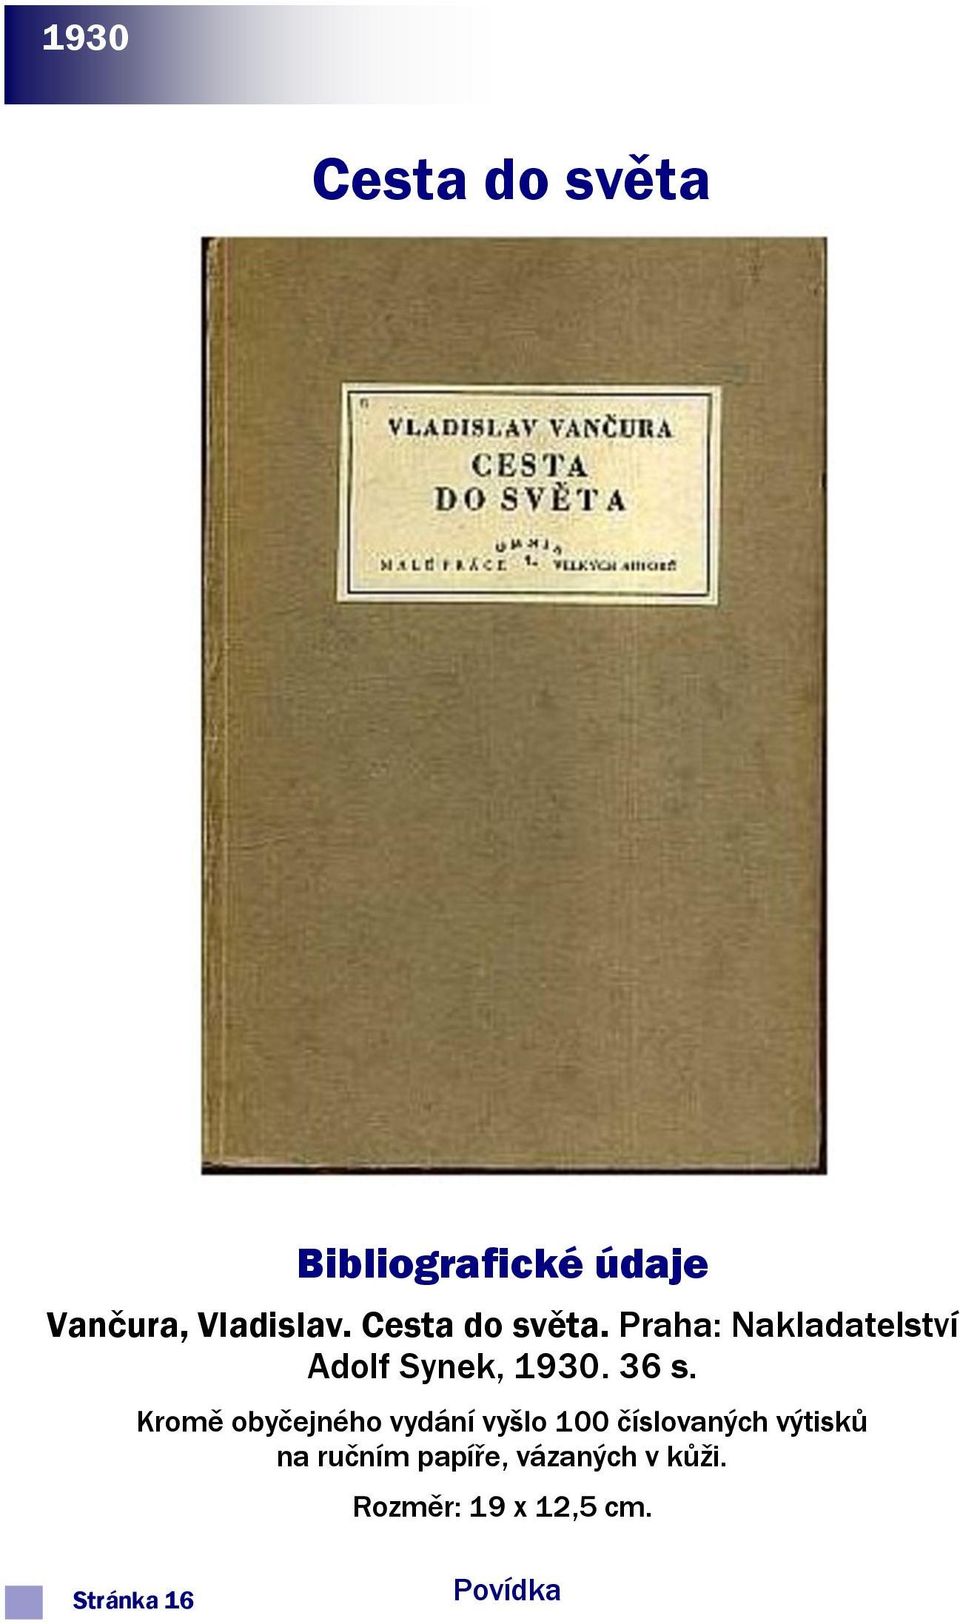 Praha: Nakladatelství Adolf Synek, 1930. 36 s.